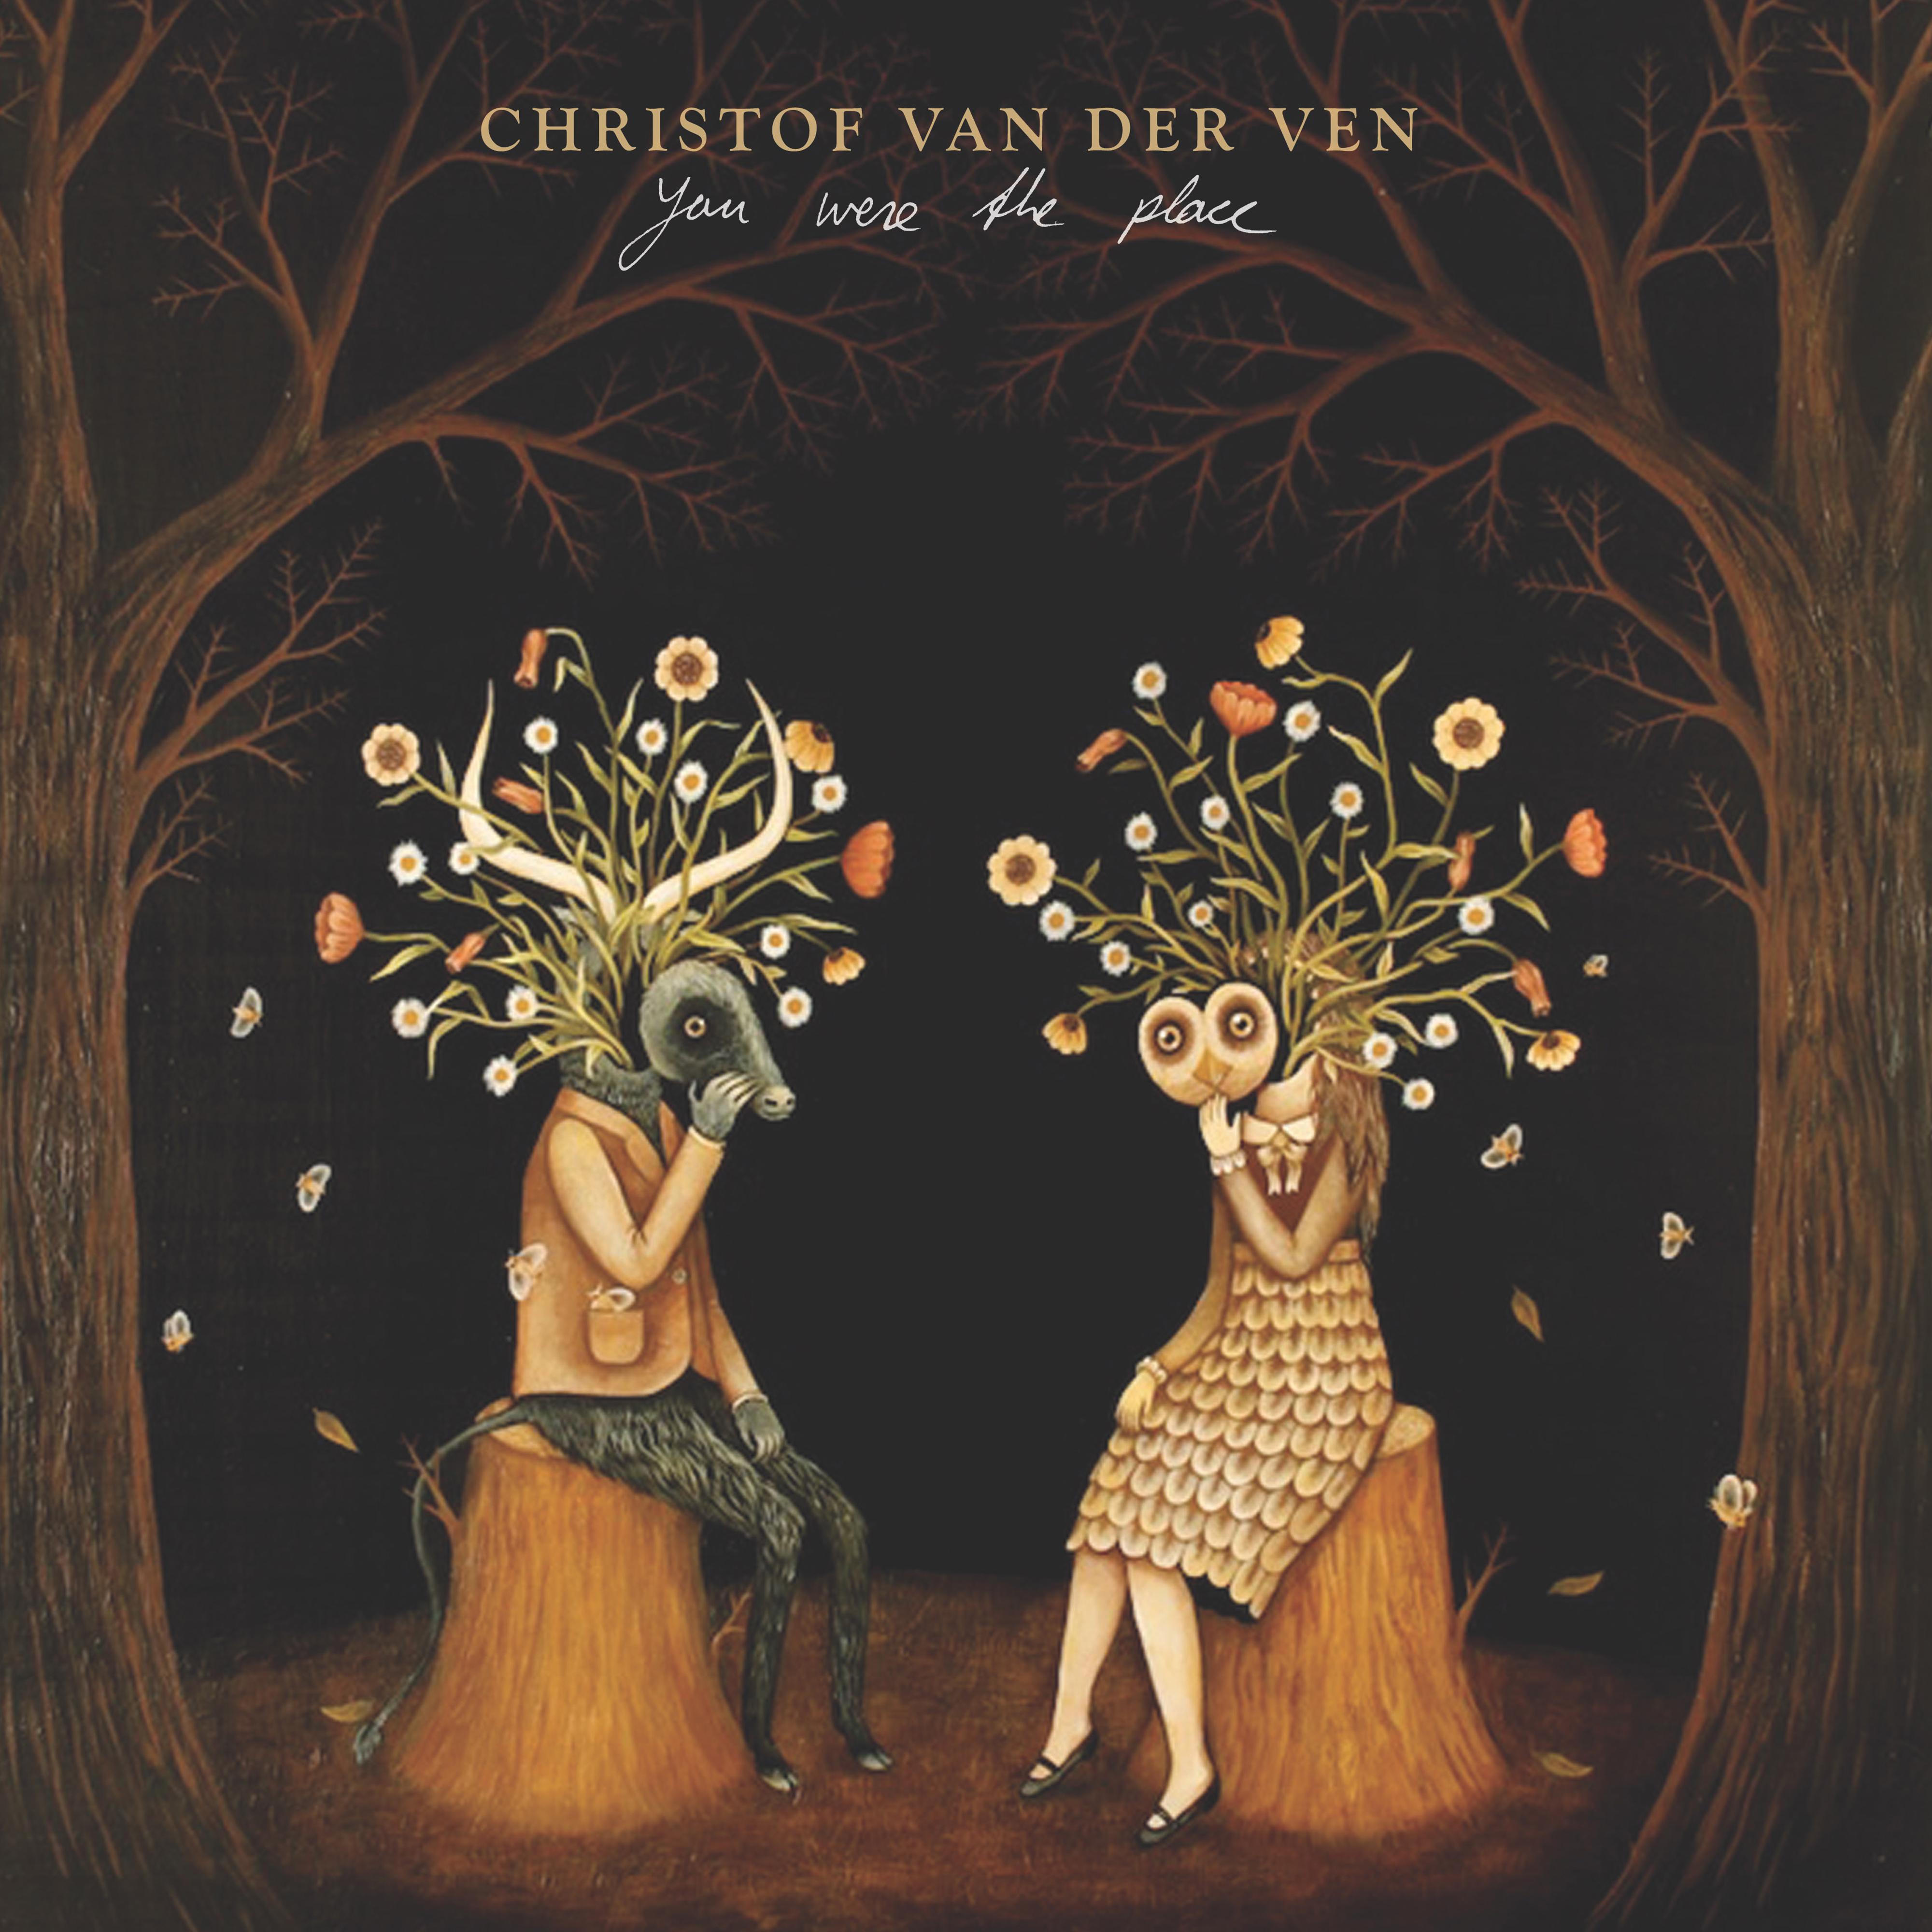 Christof van der Ven - A Darker Light